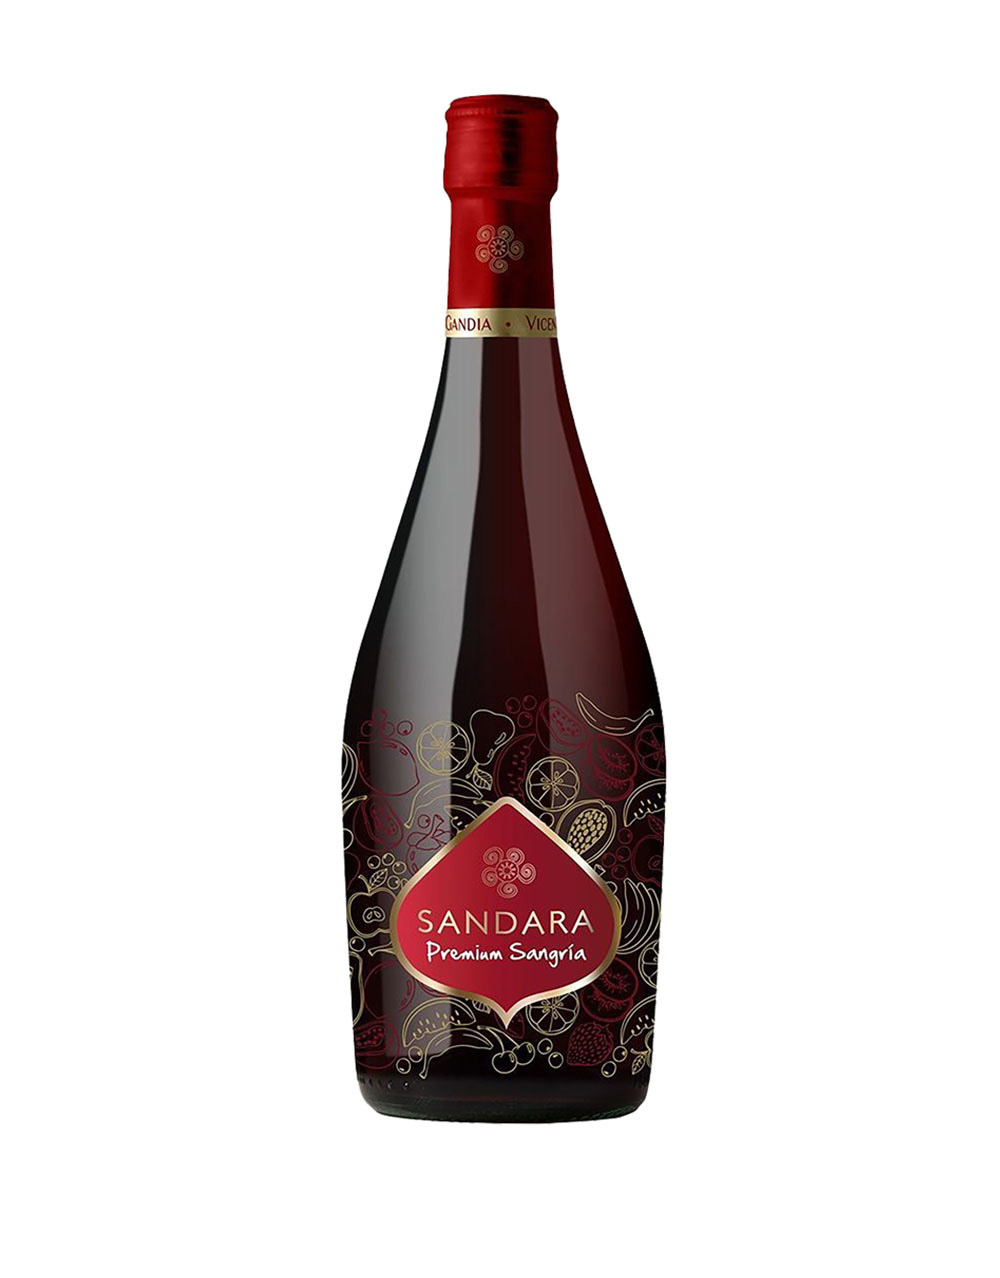 Sandara Premium Sangria Napa Valley Valencia Spain